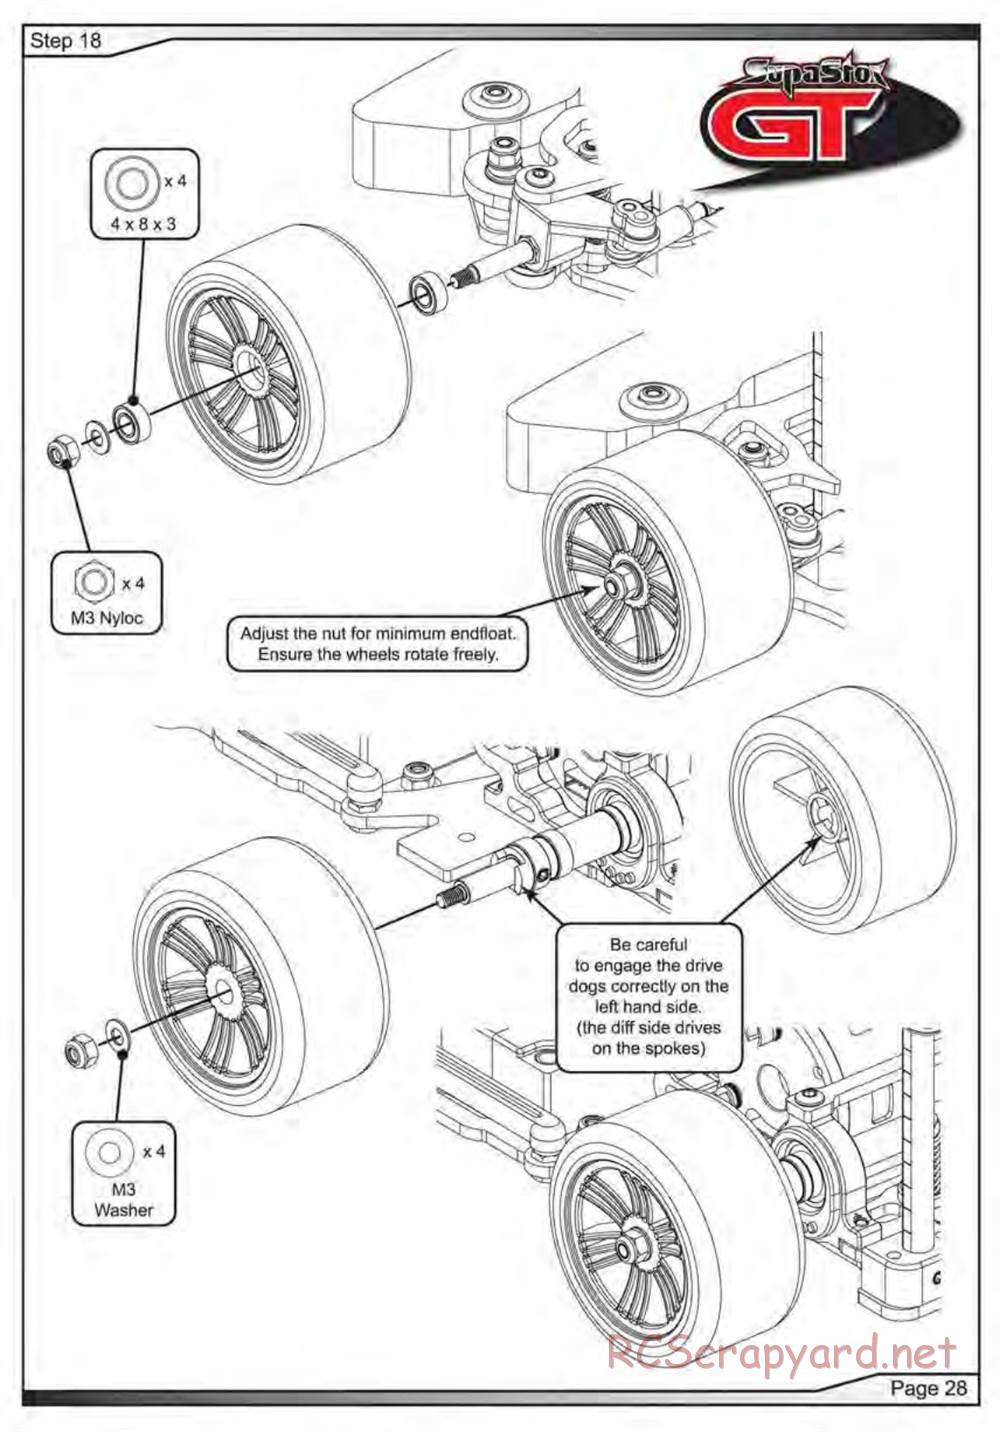 Schumacher - SupaStox GT - Manual - Page 29